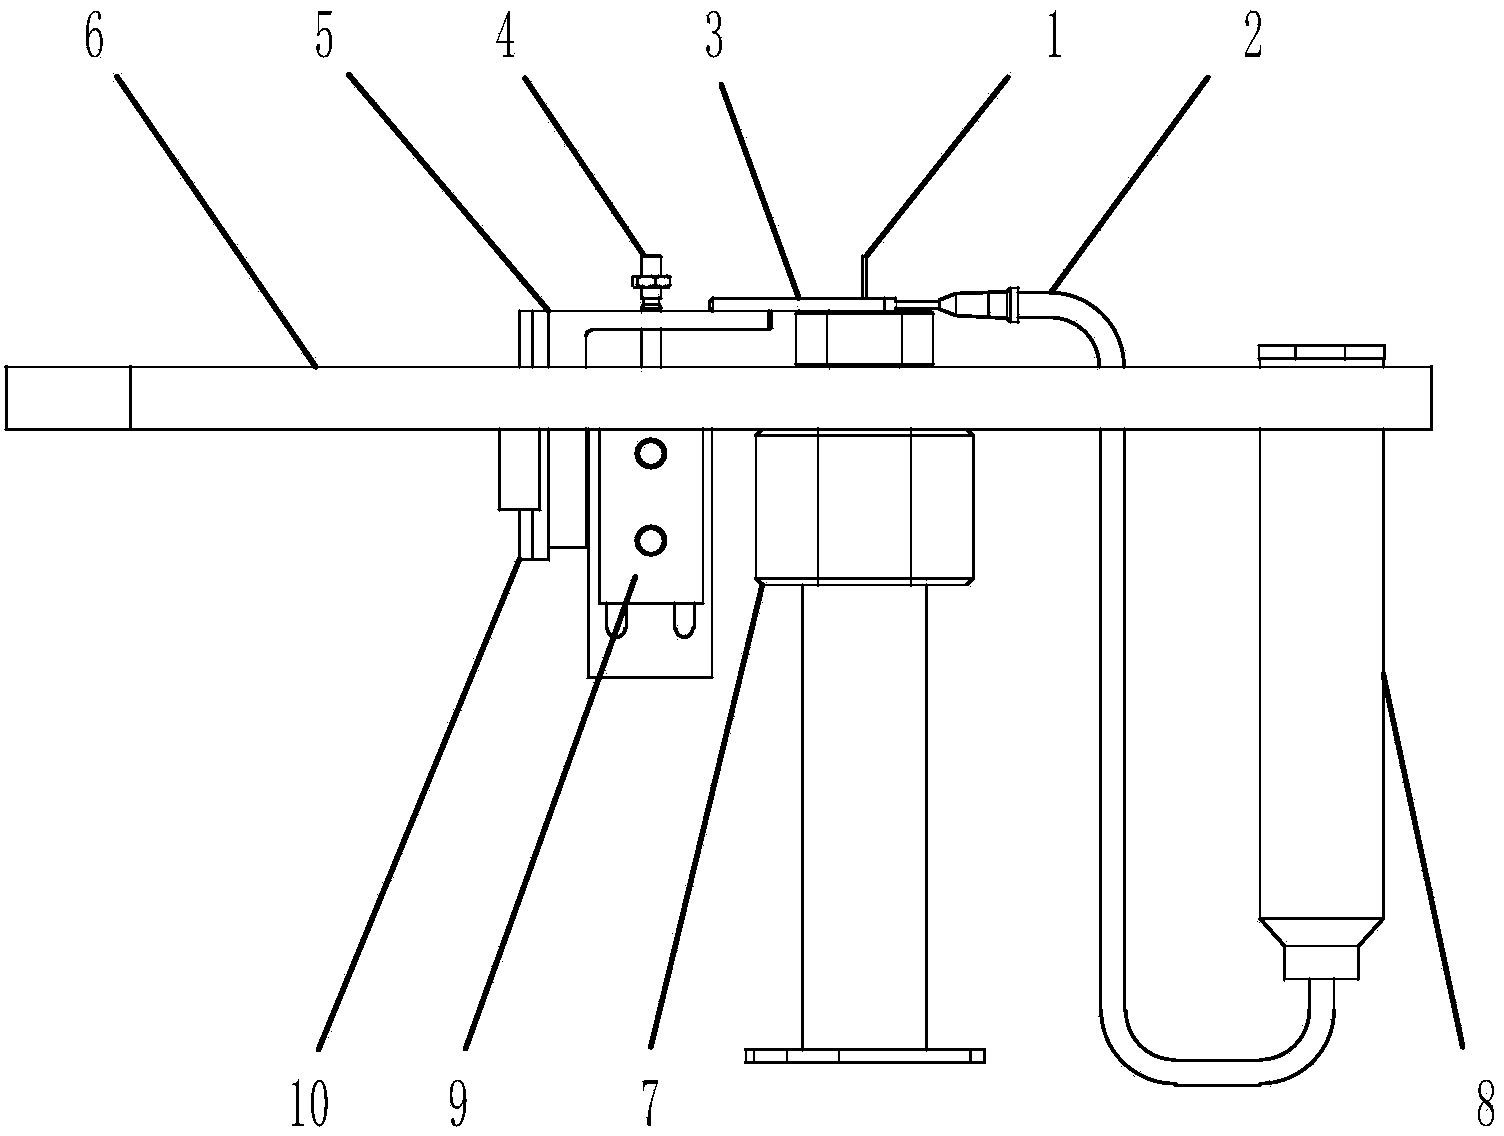 Automatic glue dispensing mechanism